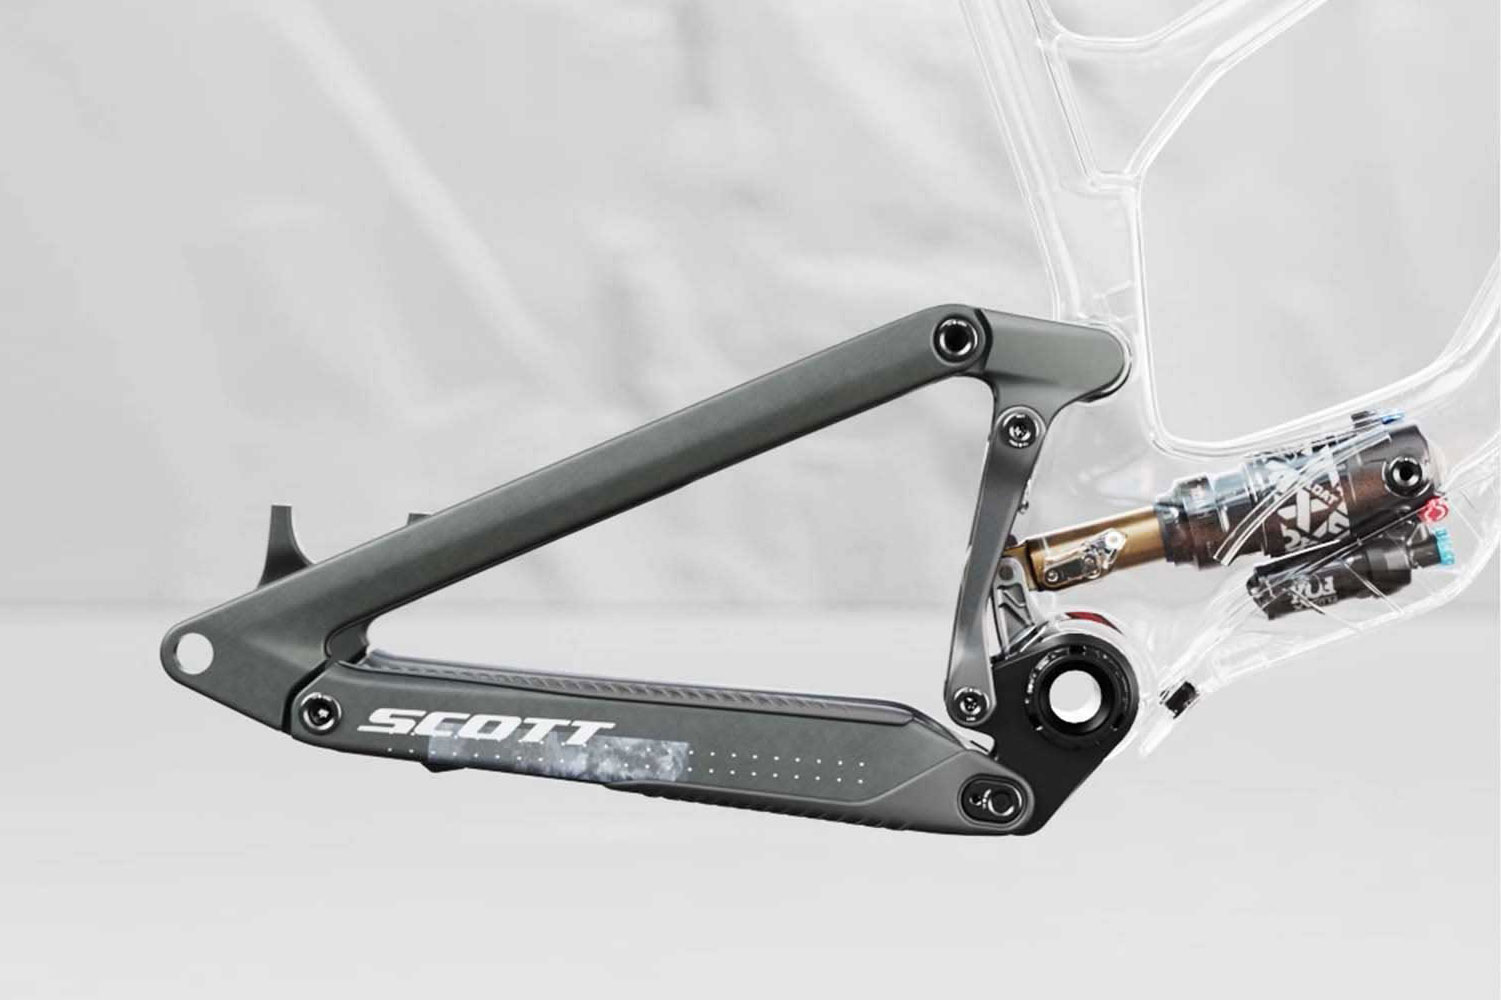 Scott Ransom 170mm 6-bar carbon freeride enduro mountain bike, X-ray detail